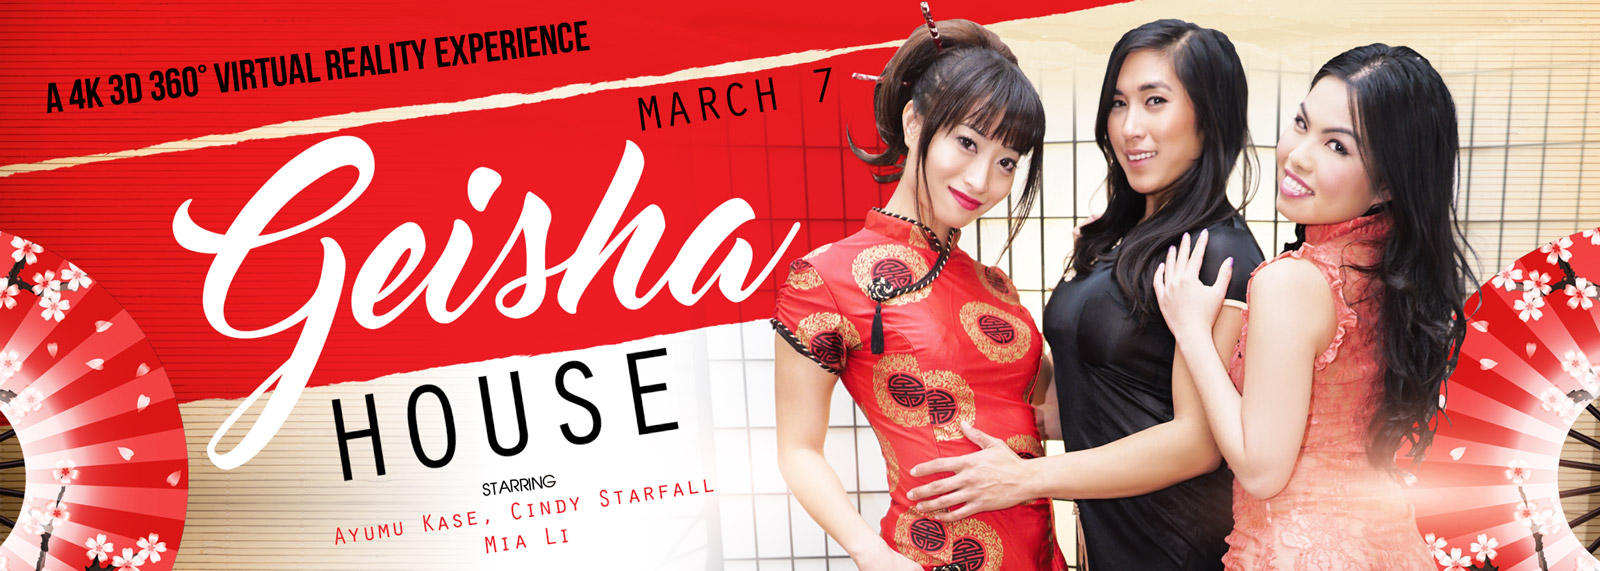 VRB Geisha House - VR Porn Video, Starring: Mia Li, Cindy Starfall, Ayumu Kase